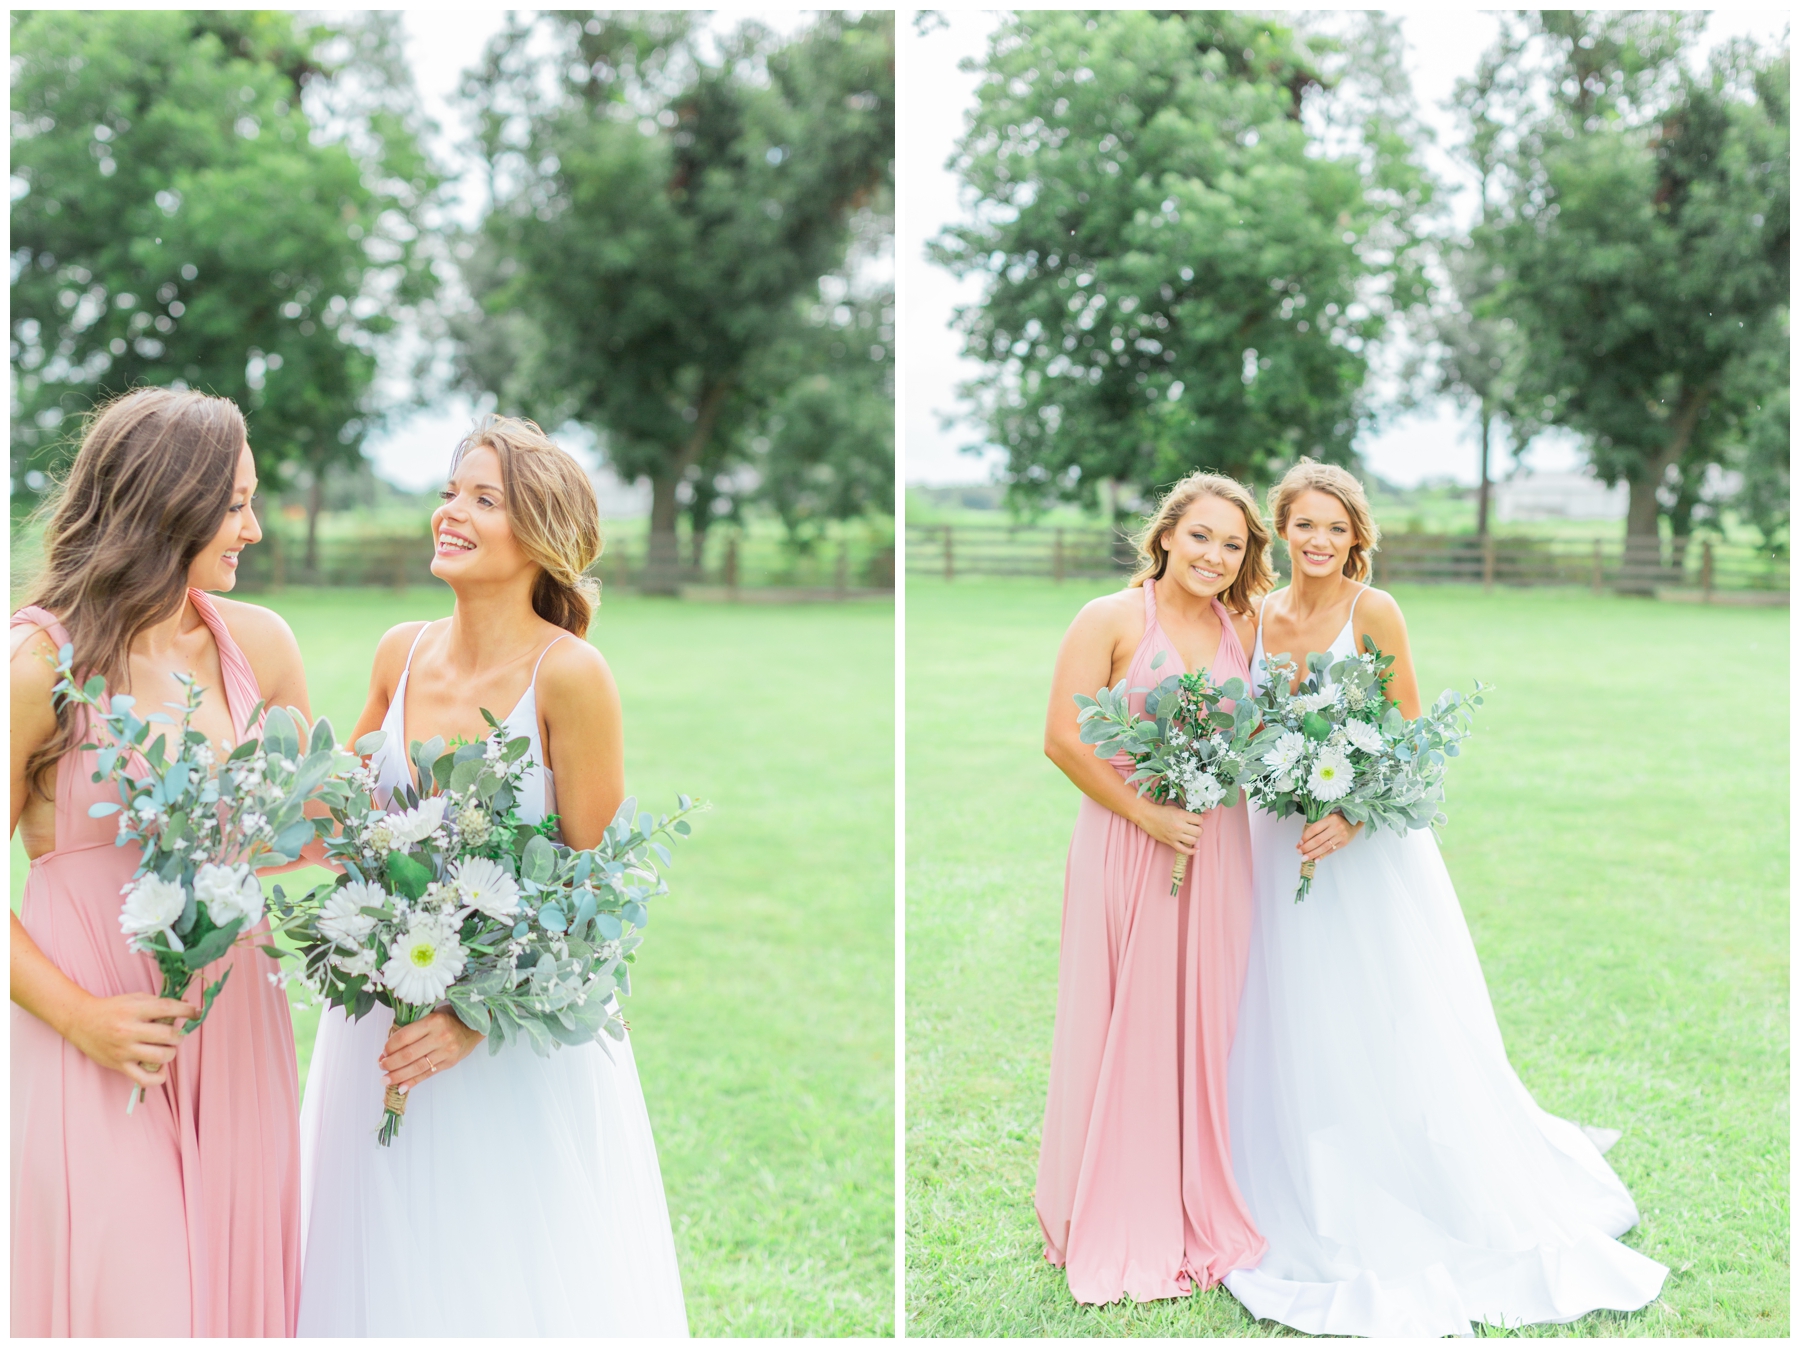 Atlanta_Georgia_Bridesmaids_Pink Dresses_Fun Photos_Engaged_Wedding Ideas_Posing_Blog_Stylish Bride_ Photographer